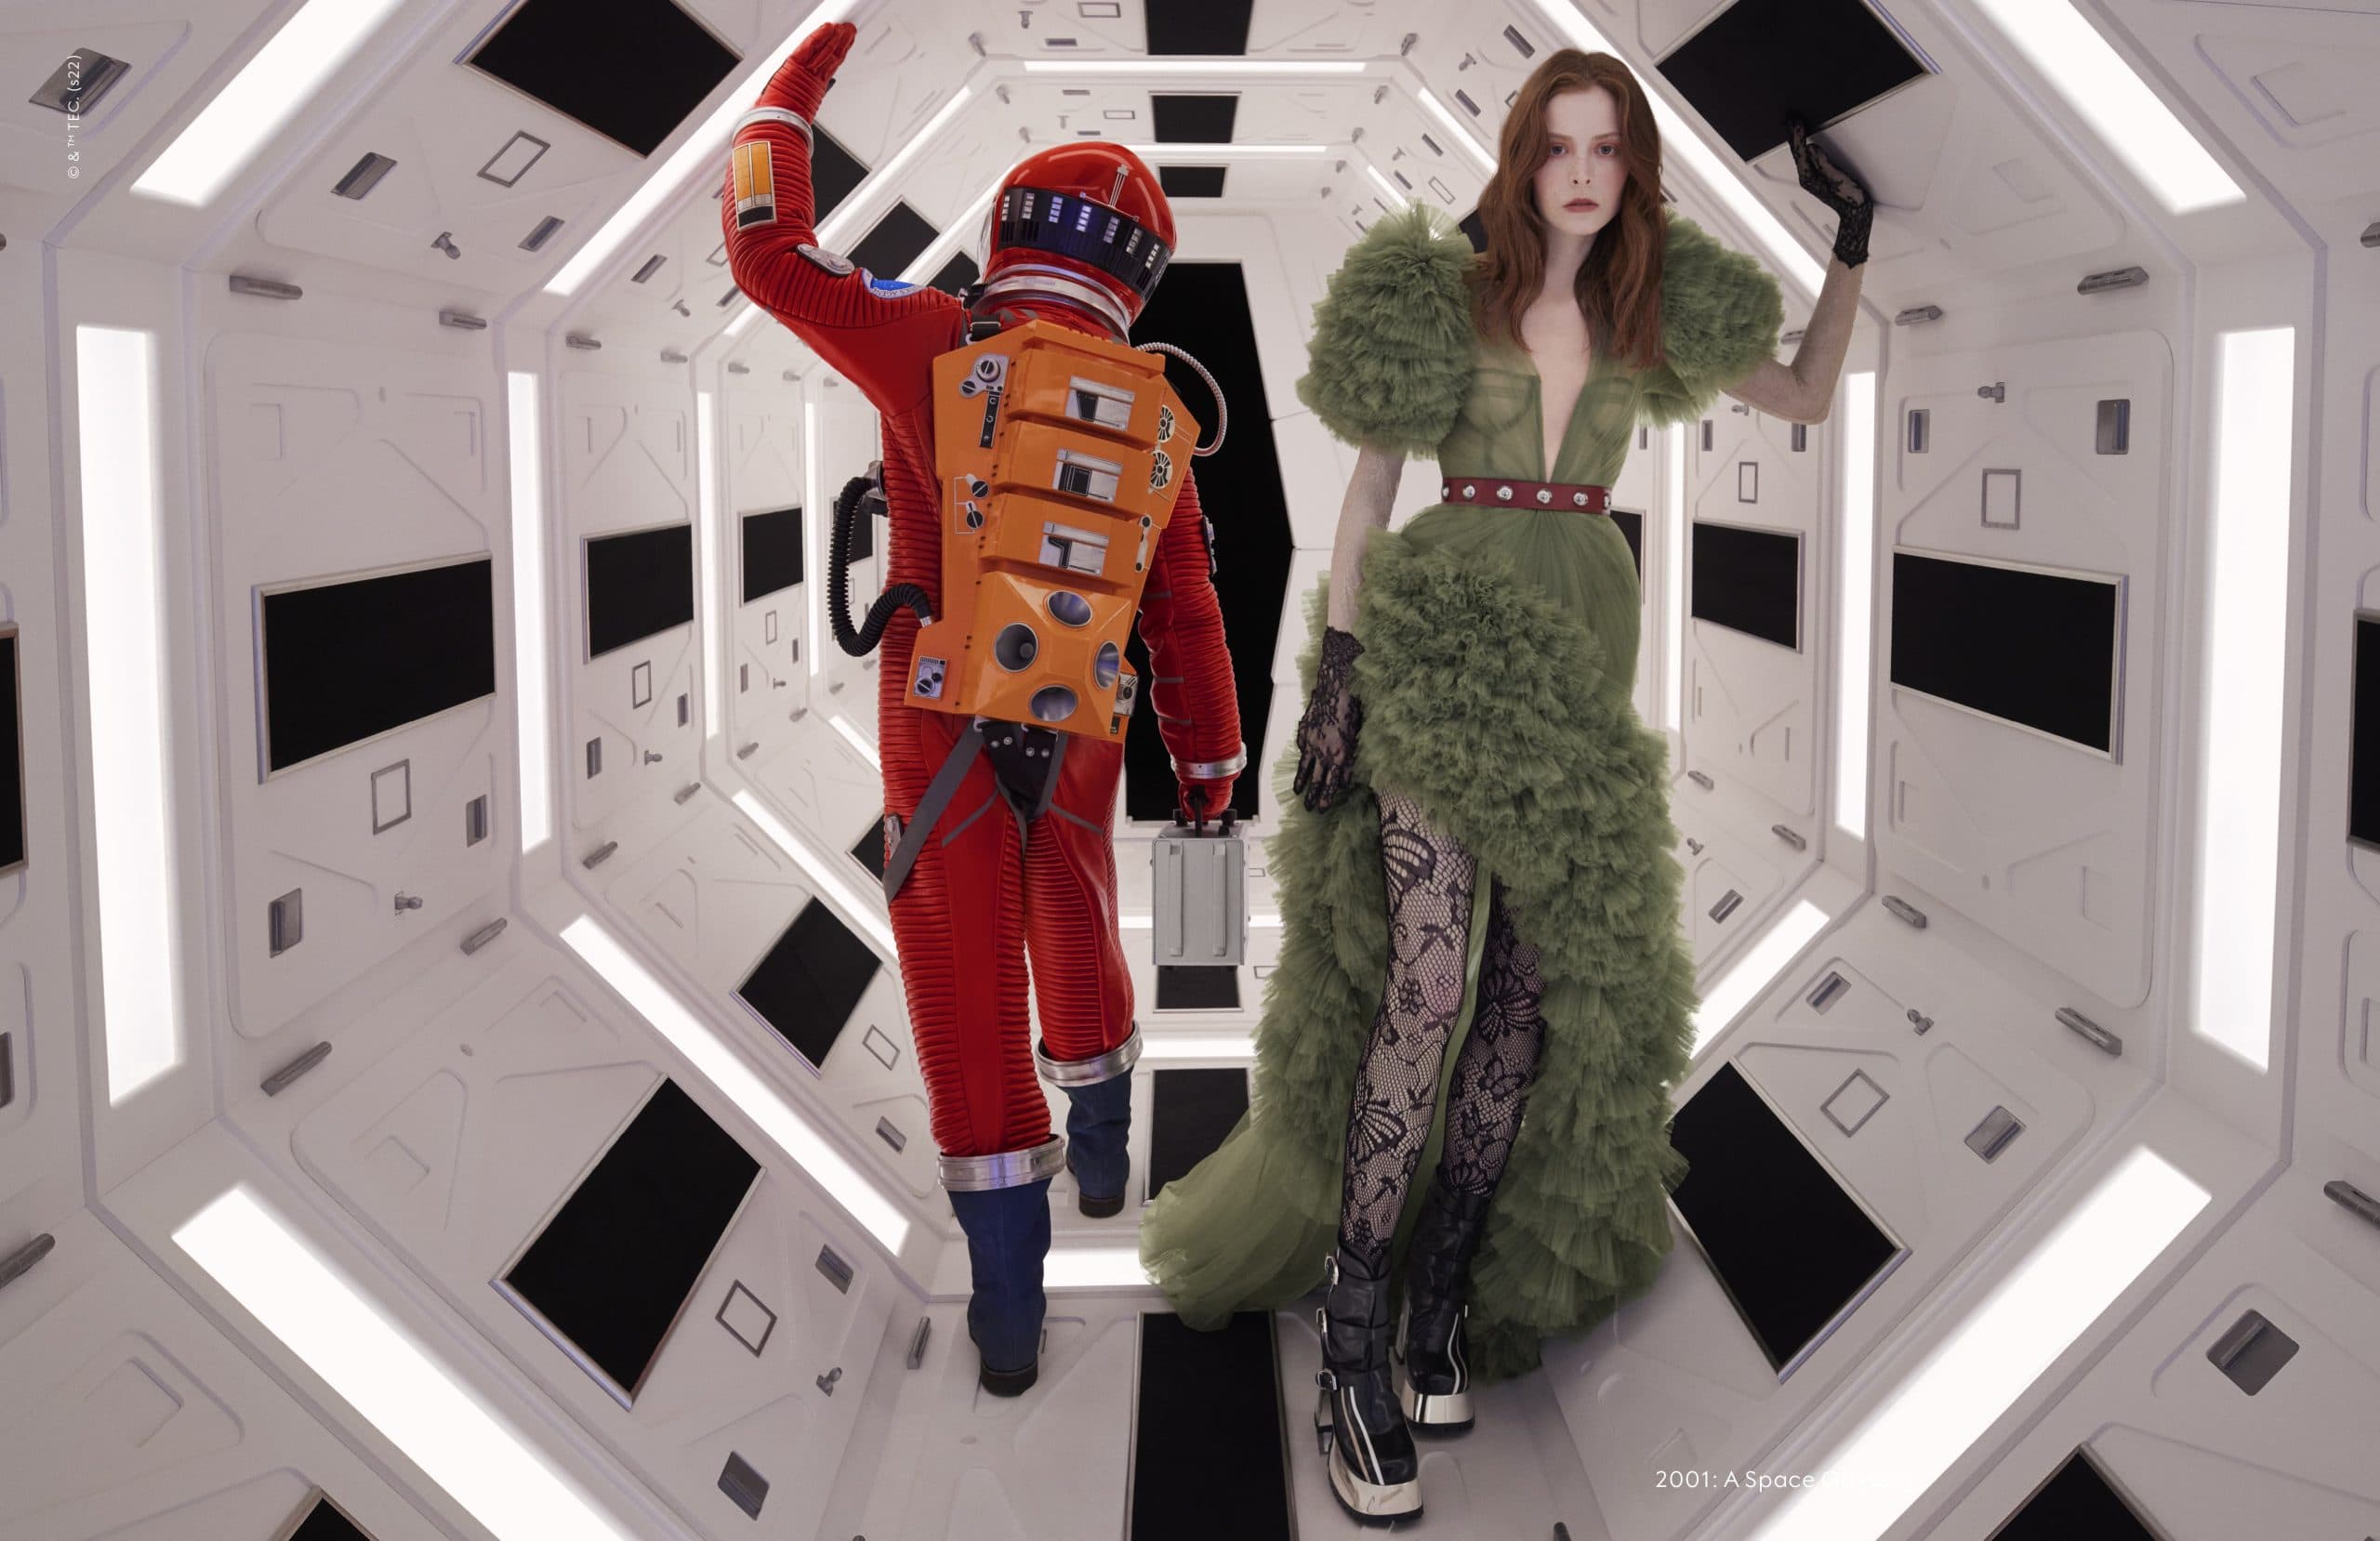 Top 10 ad Campaigns Fall 2022 image of Gucci ad campaign